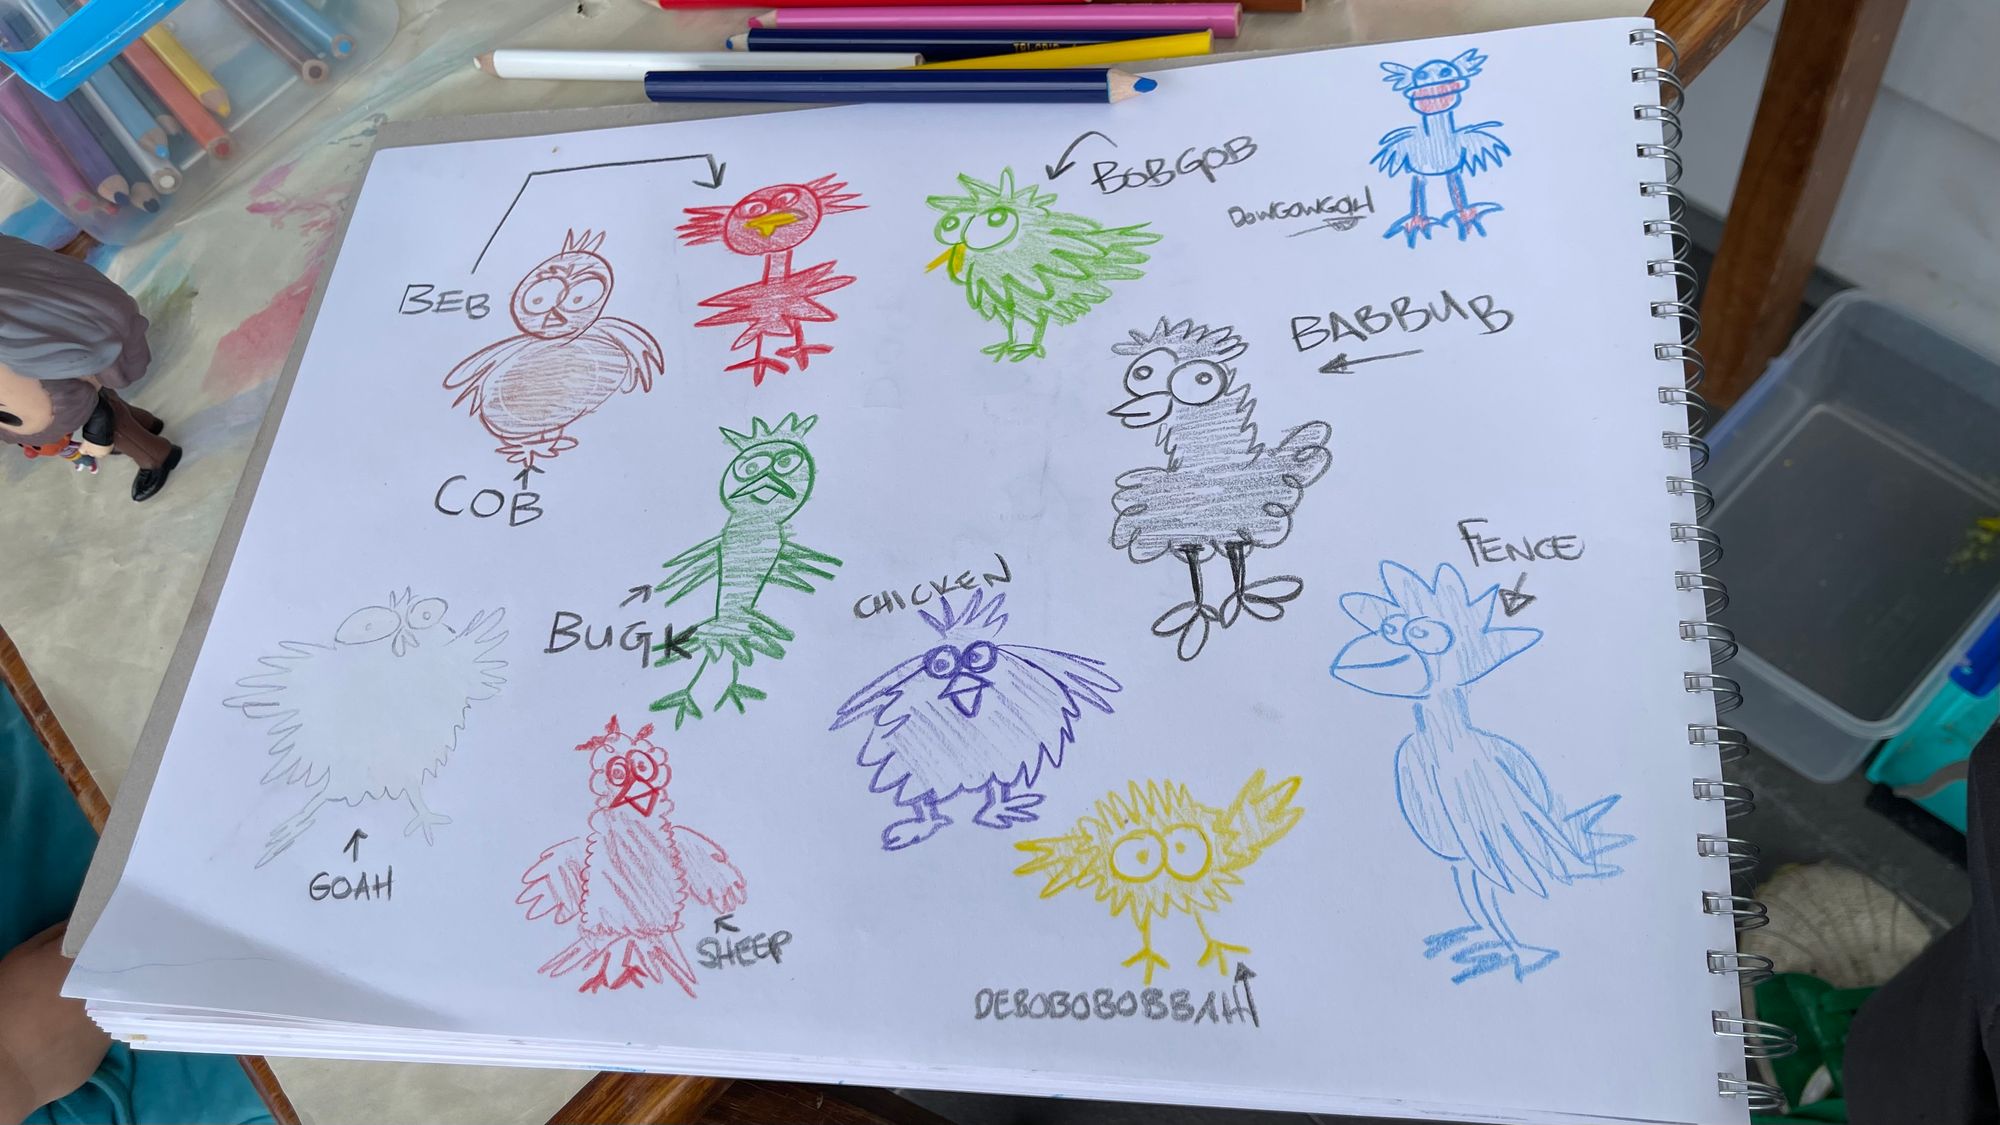 Drawings of birds with the names Cob, Beb, Bug, BobGob, Babbub, Goah, Sheep, Chicken, Fence and Debobobobbah